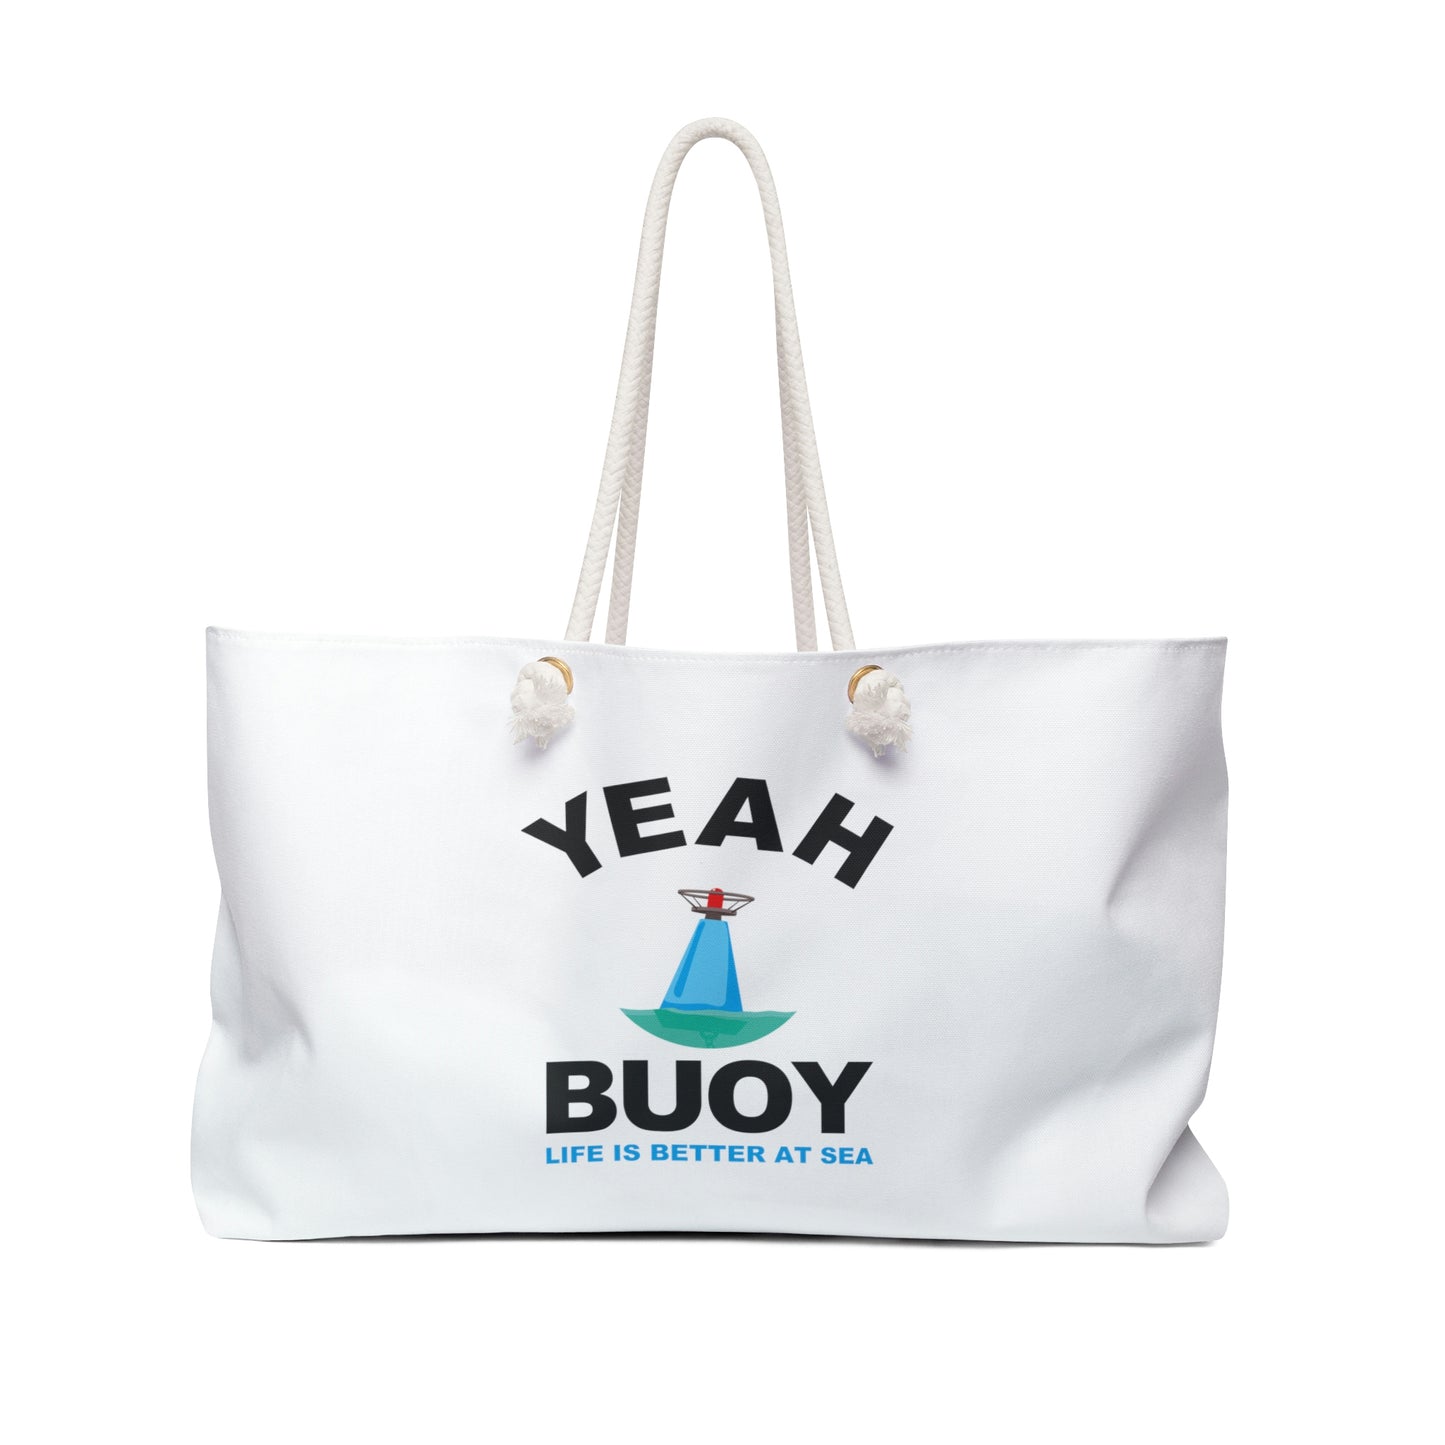 Yeah Buoy Life is Better at Sea–Weekender Bag